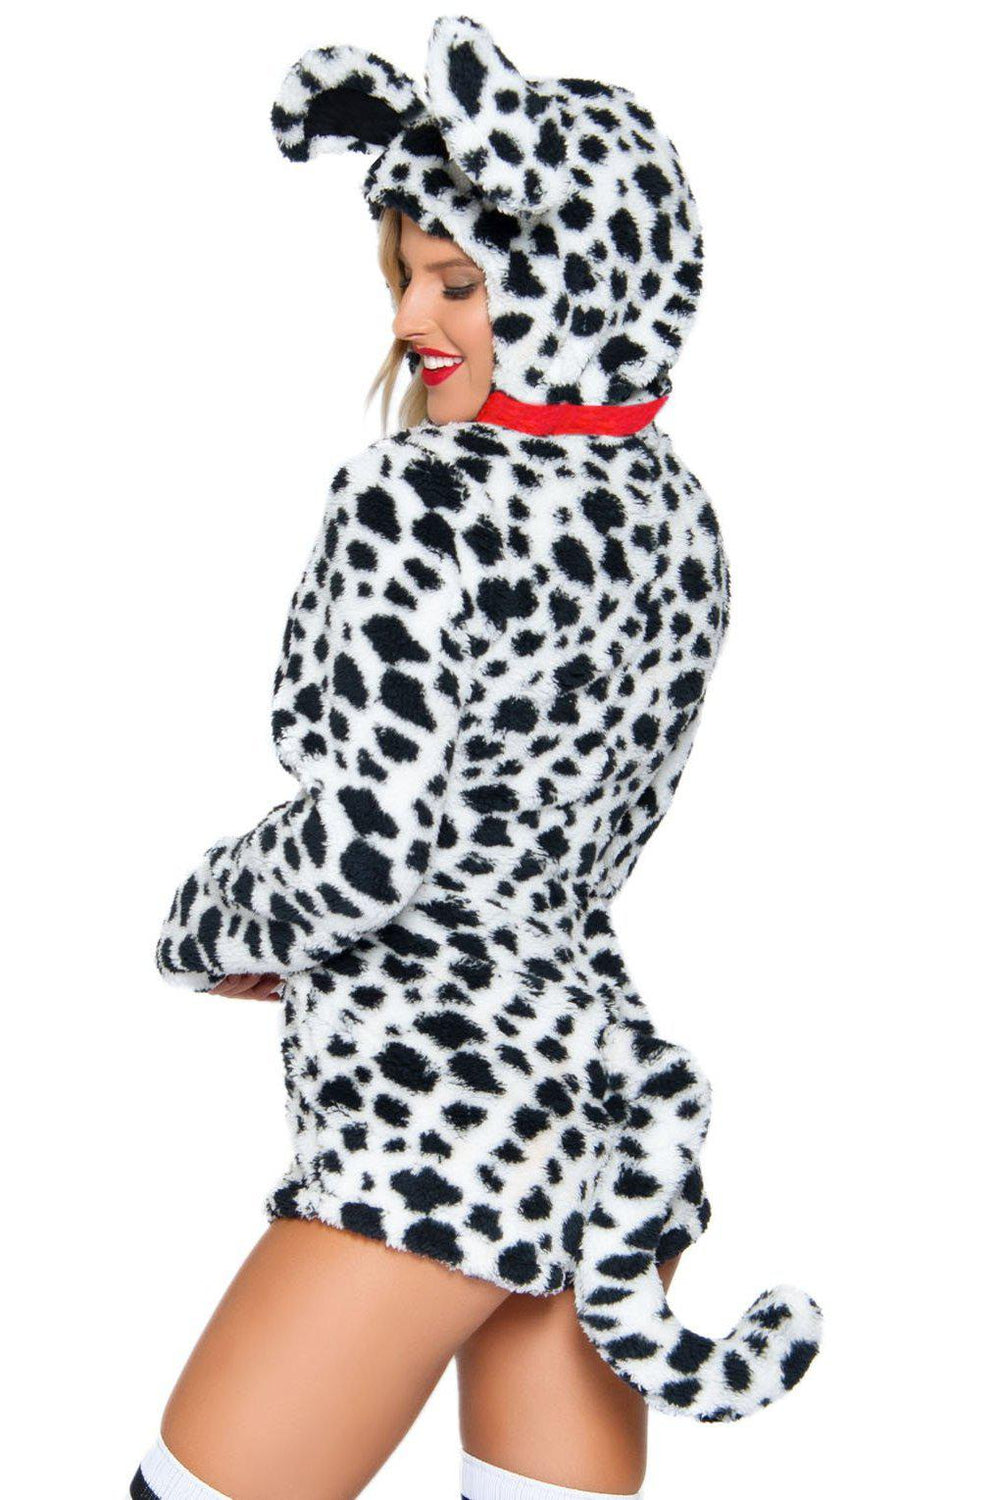 Darling Dalmatian Costume-Animal Costumes-Leg Avenue-SEXYSHOES.COM